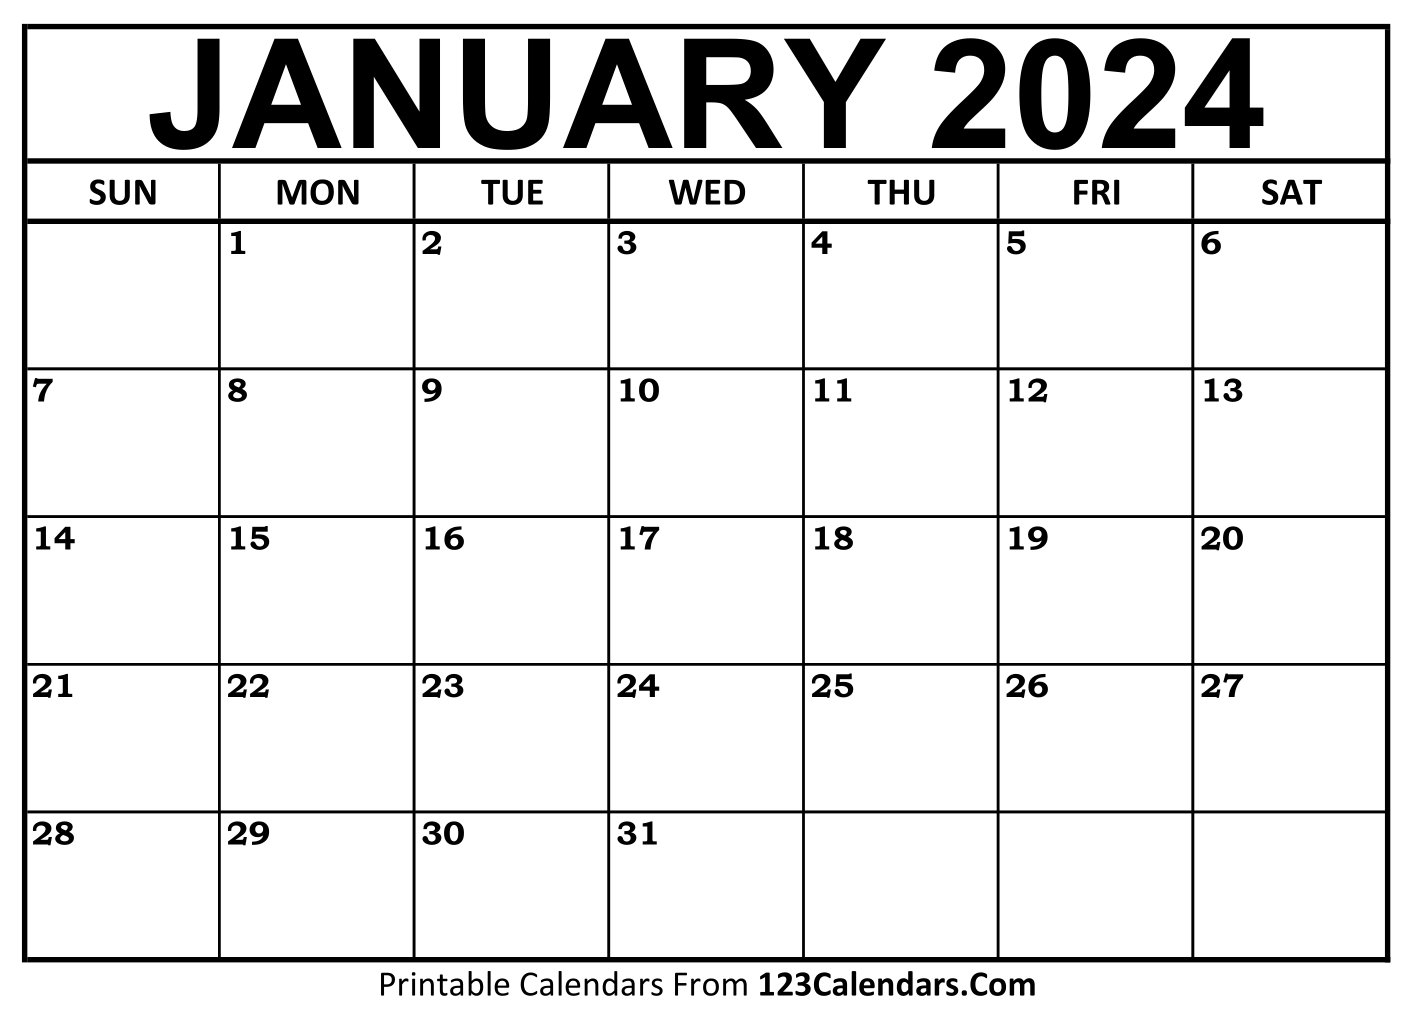 Printable January 2024 Calendar Templates - 123Calendars for Calendar Printable Jan 2024